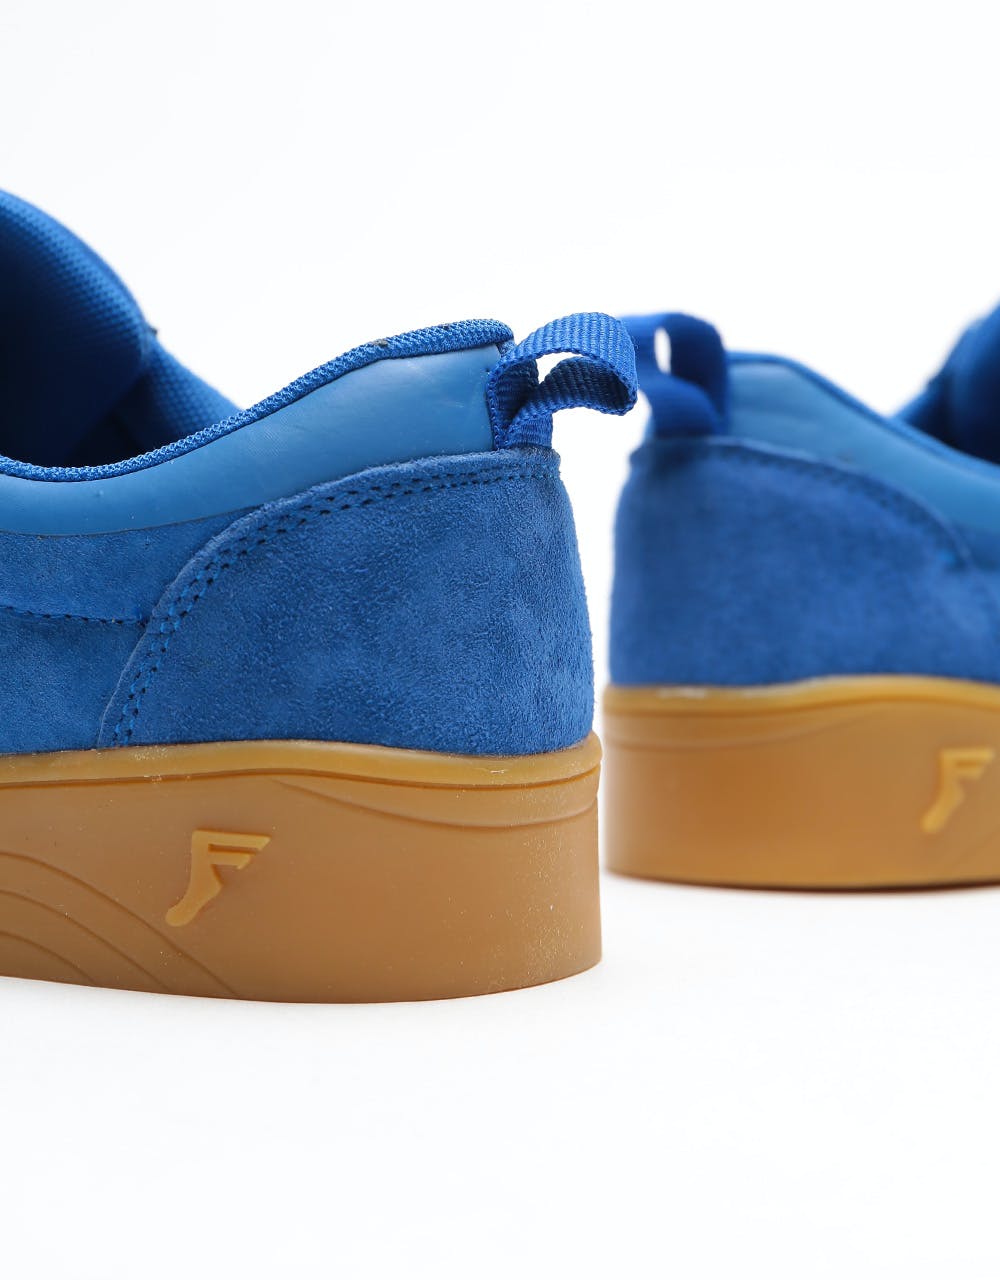 Footprint Intercept Skate Shoes - Navy Blue